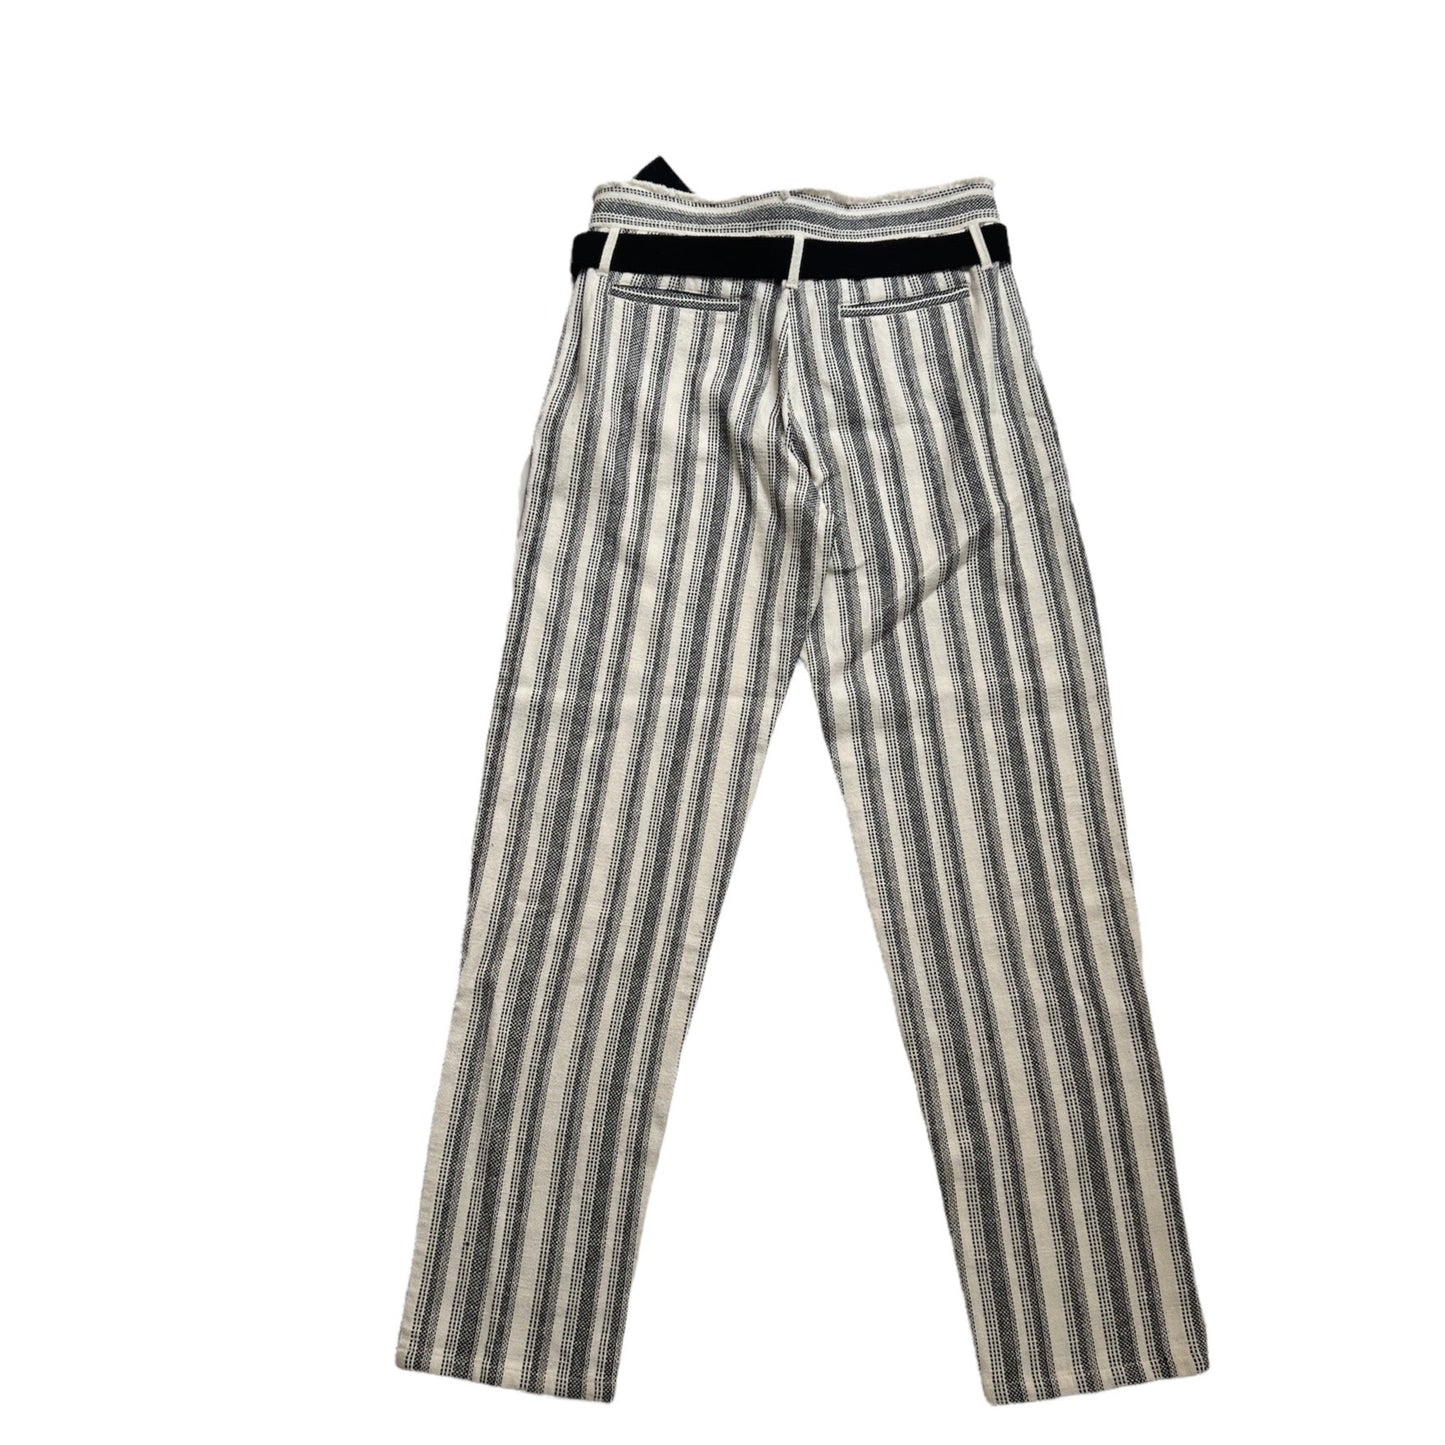 Black & White Cotton Pants with Belt - M